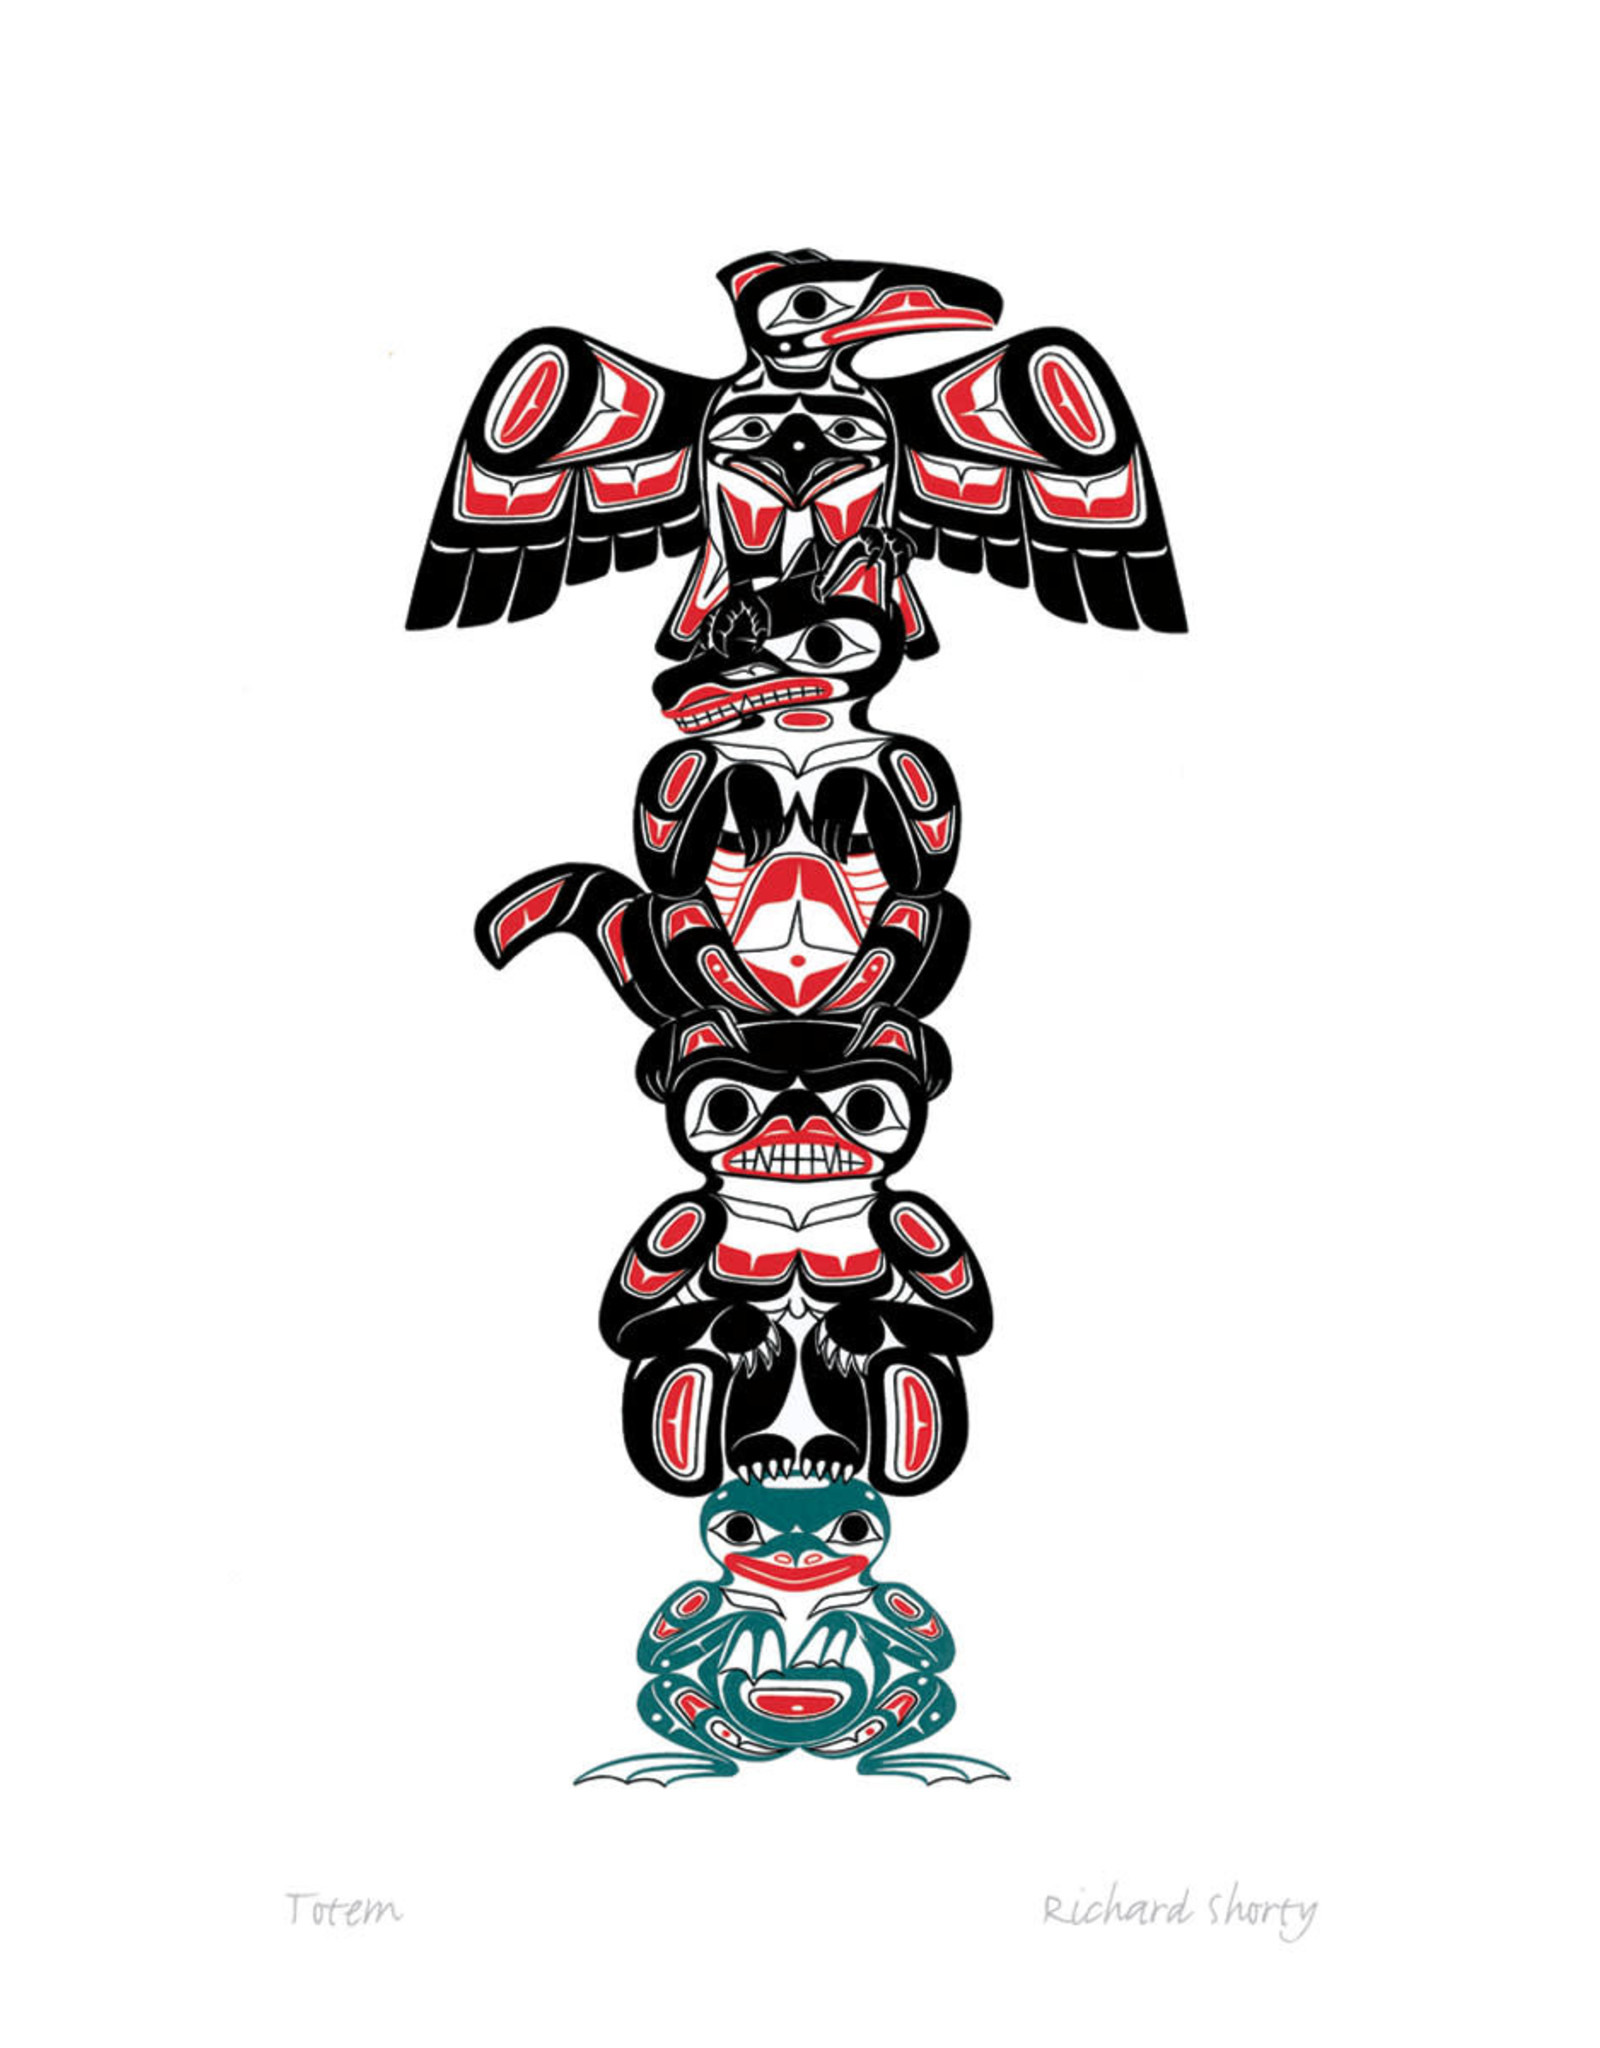 Totem by Richard Shorty Card